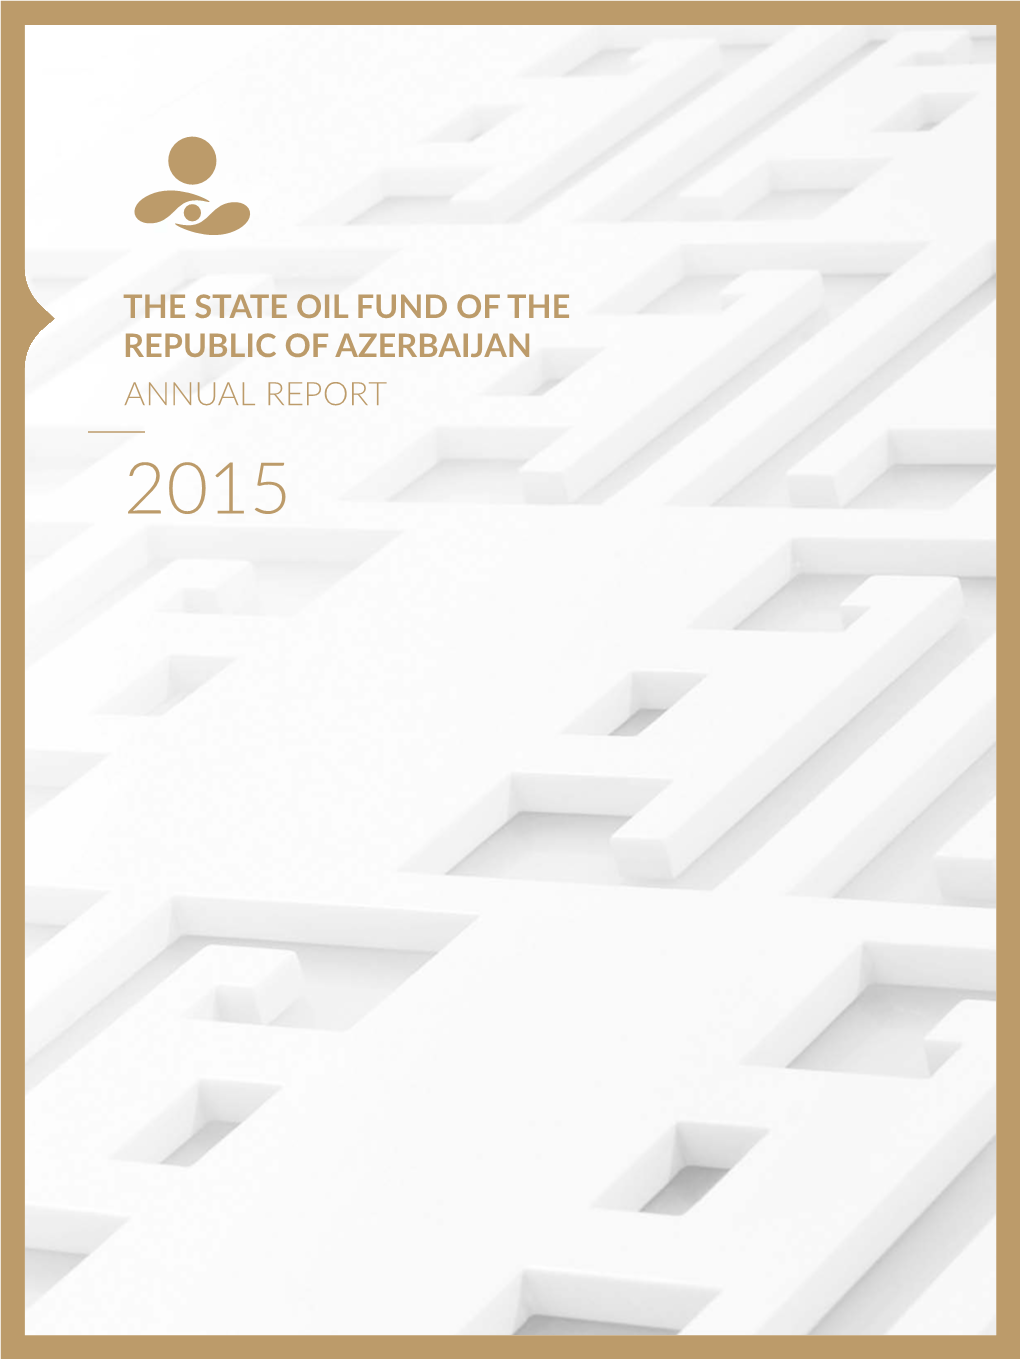 The State Oil Fund of the Republic of Azerbaijan Annual Report 2015 Content